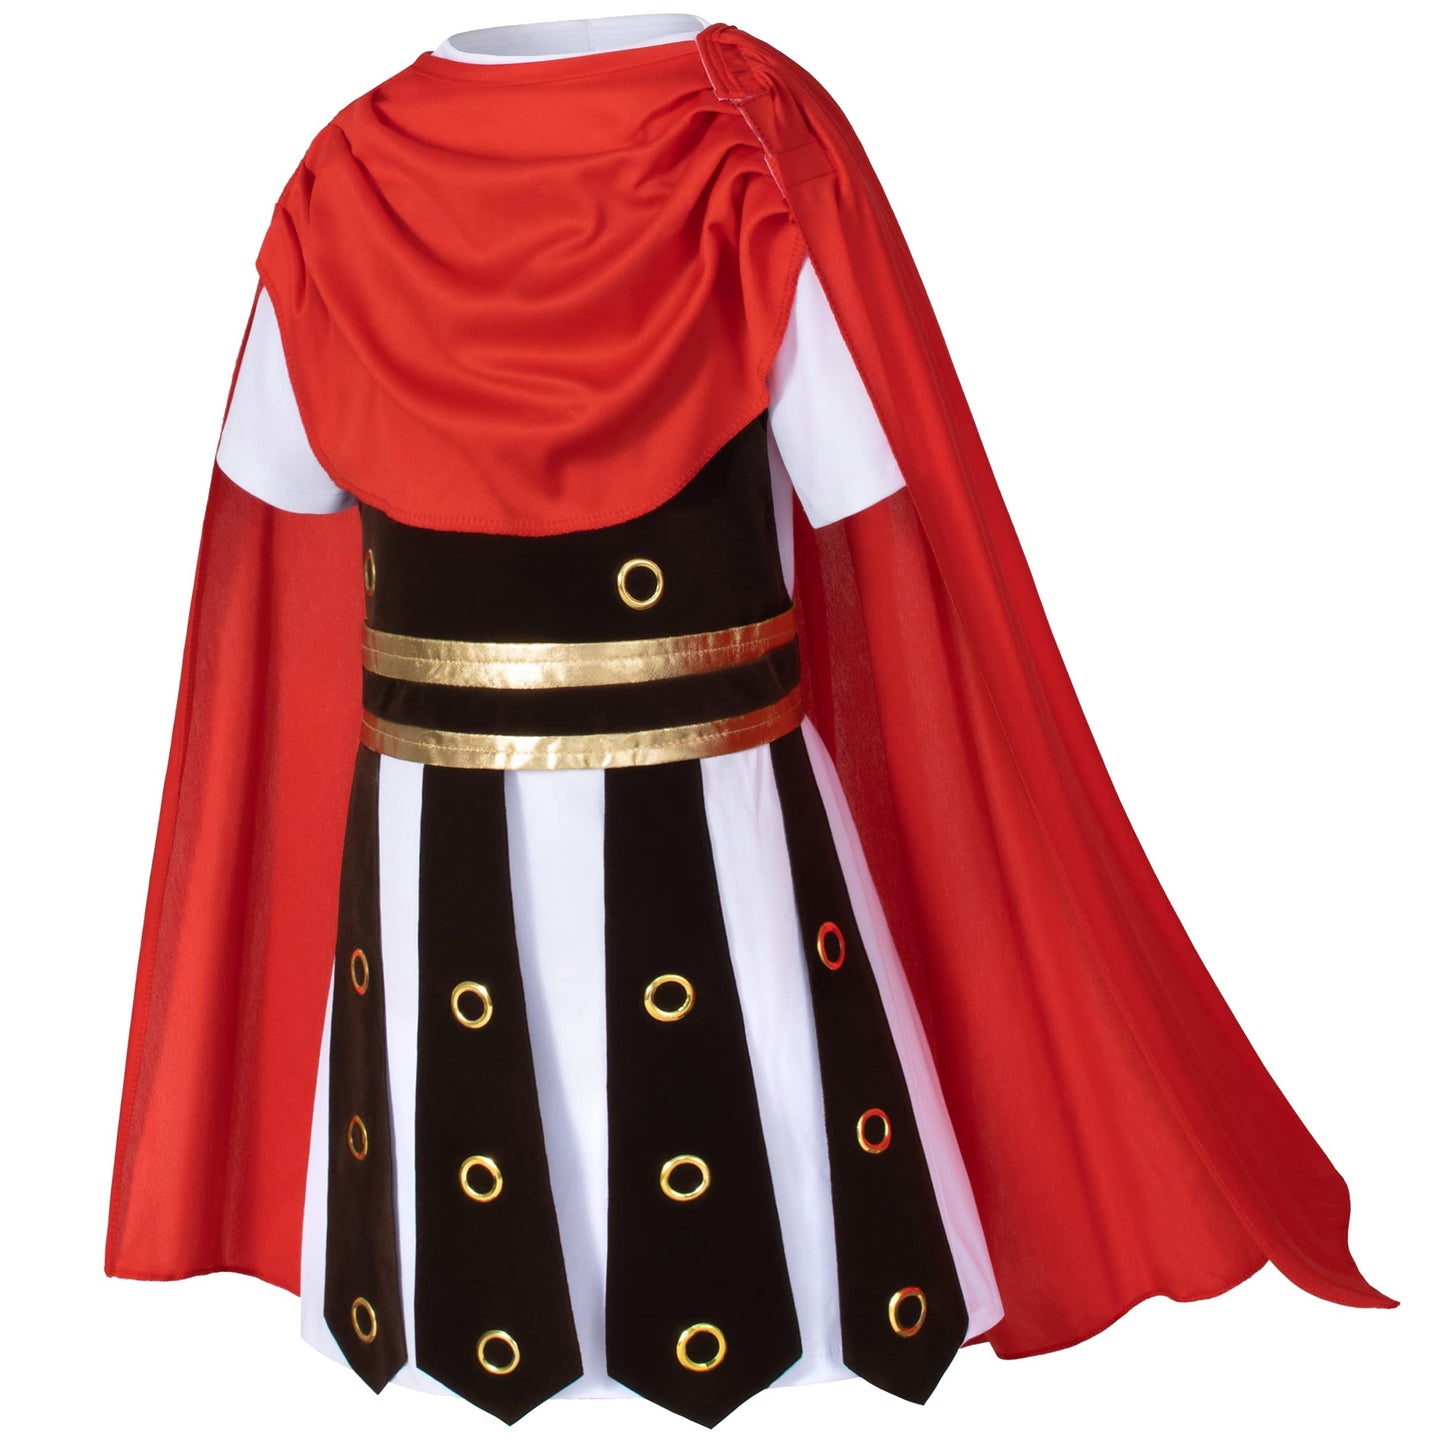 Child Medieval Roman Warrior Knight Renaissance Performance Costume